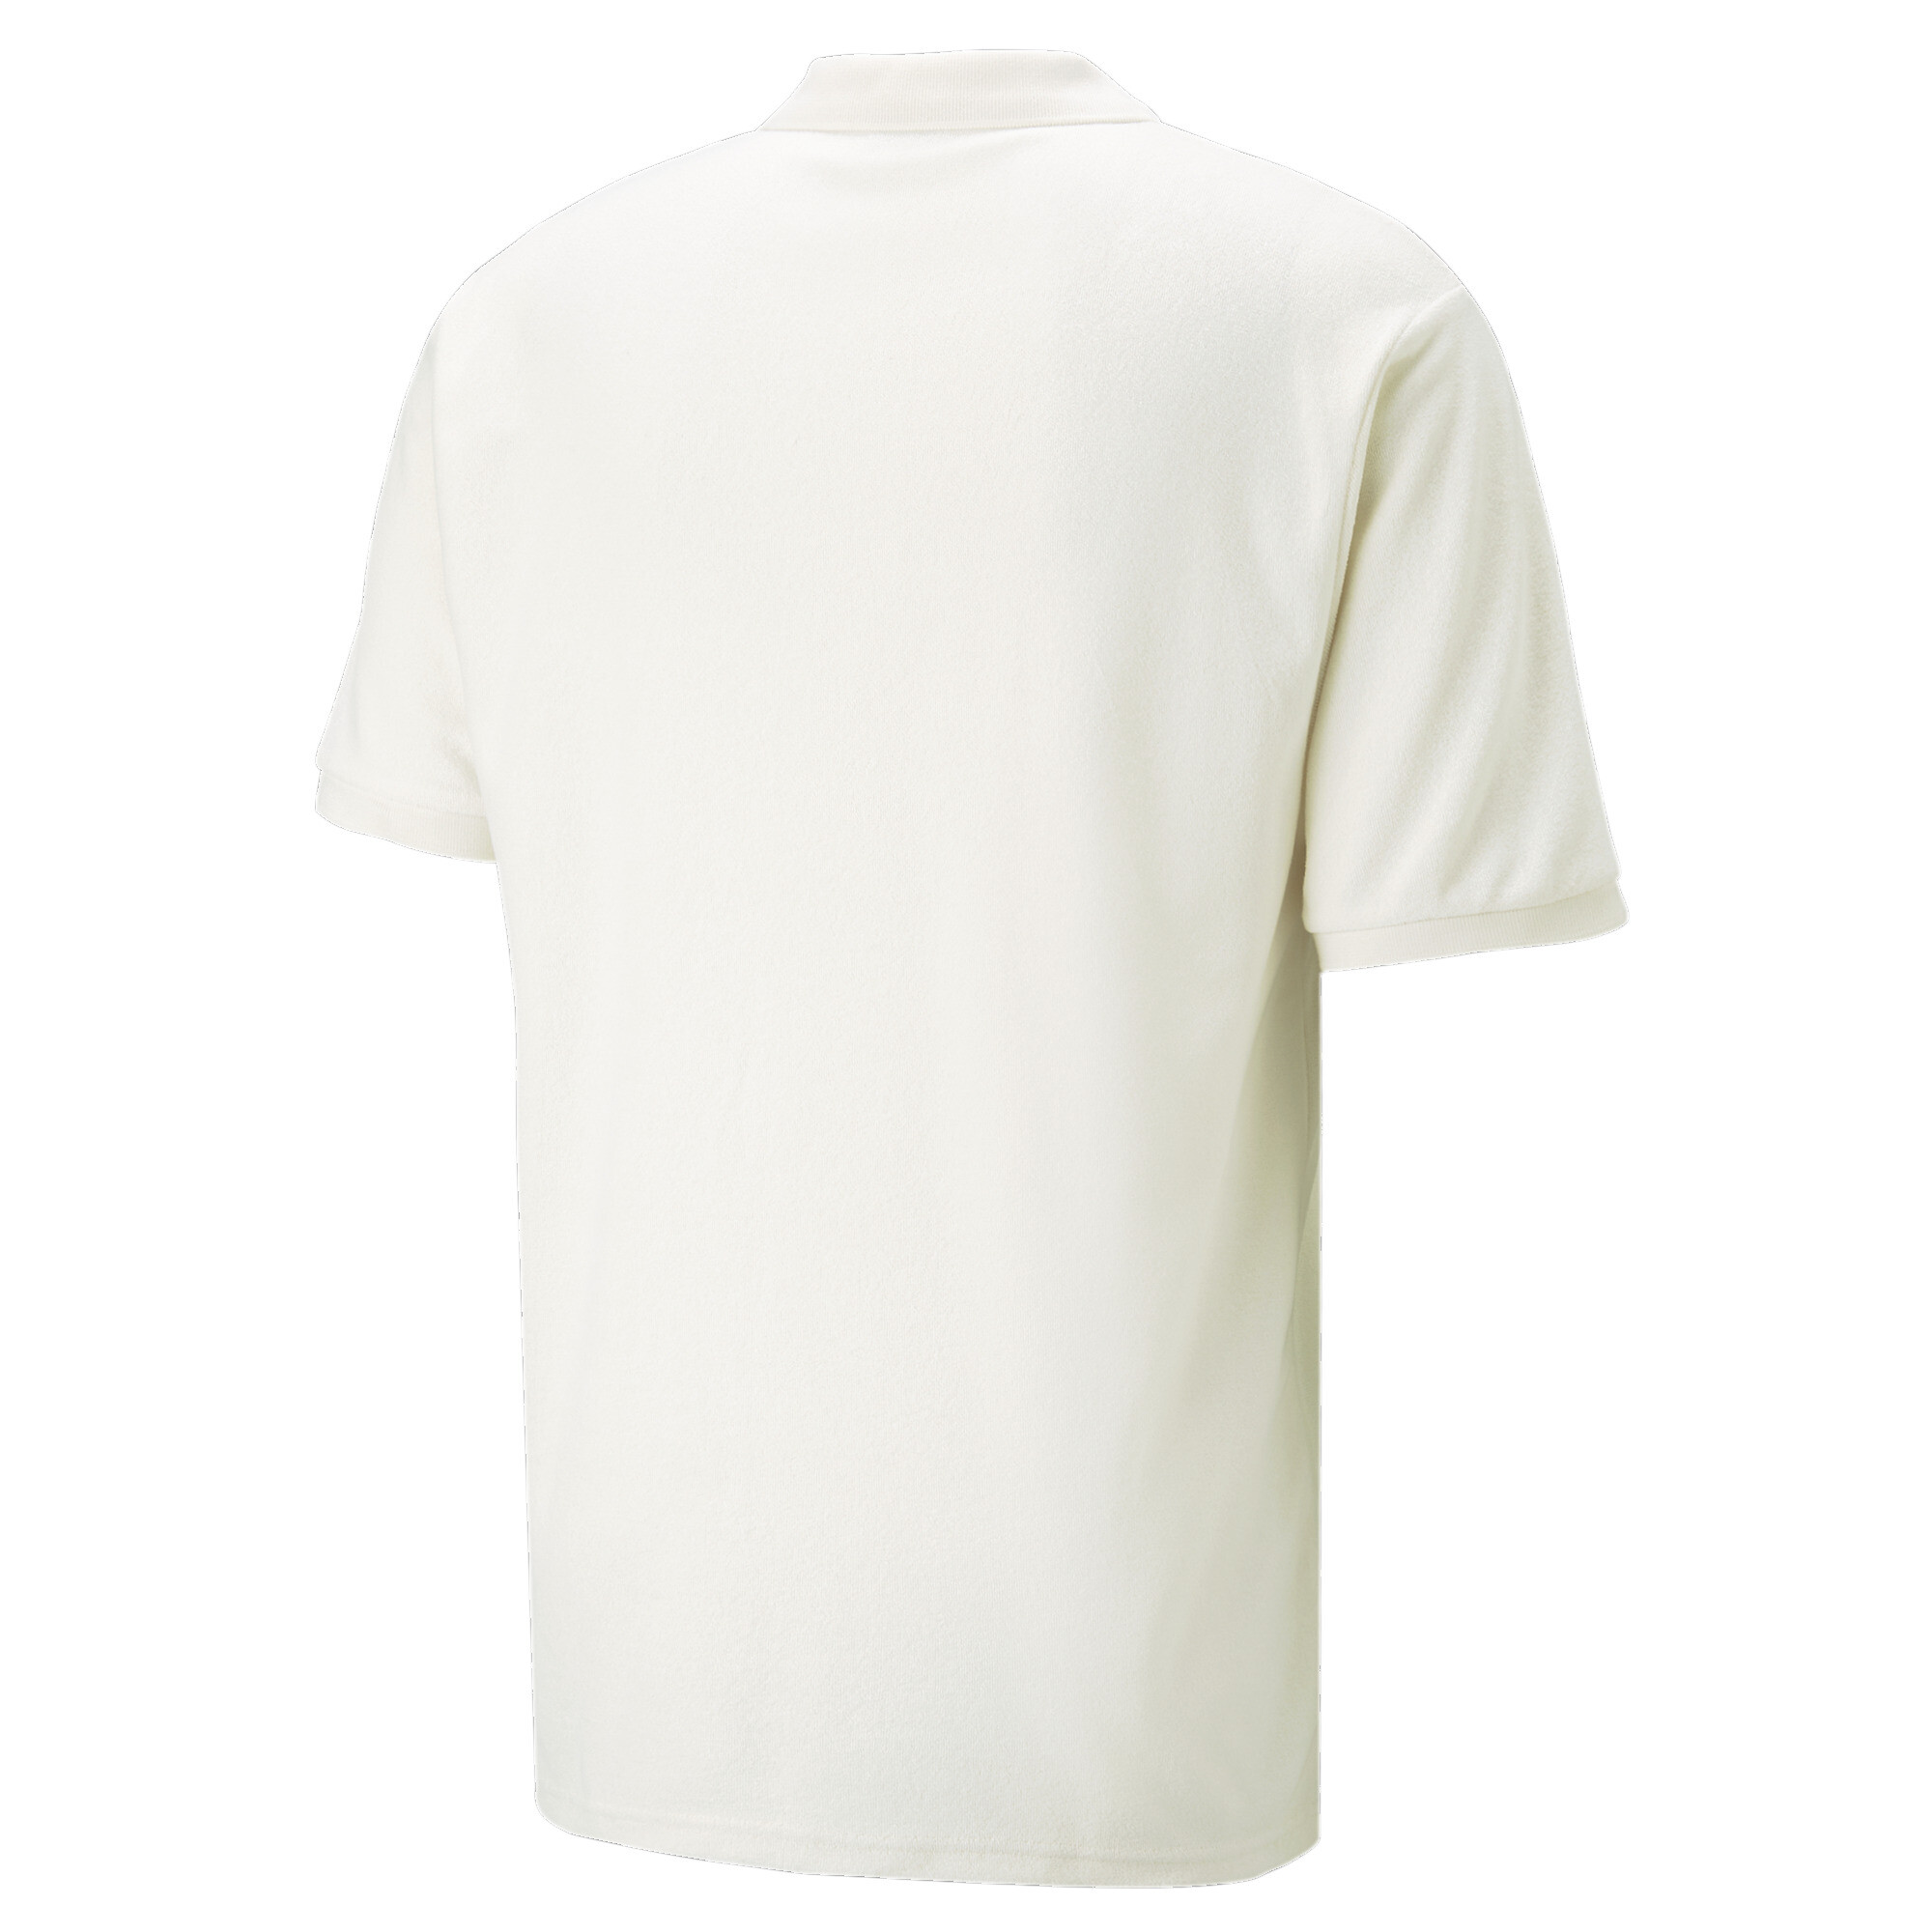 Men's Puma Classics Towelling Polo Shirt T-Shirt, White T-Shirt, Size S T-Shirt, Clothing